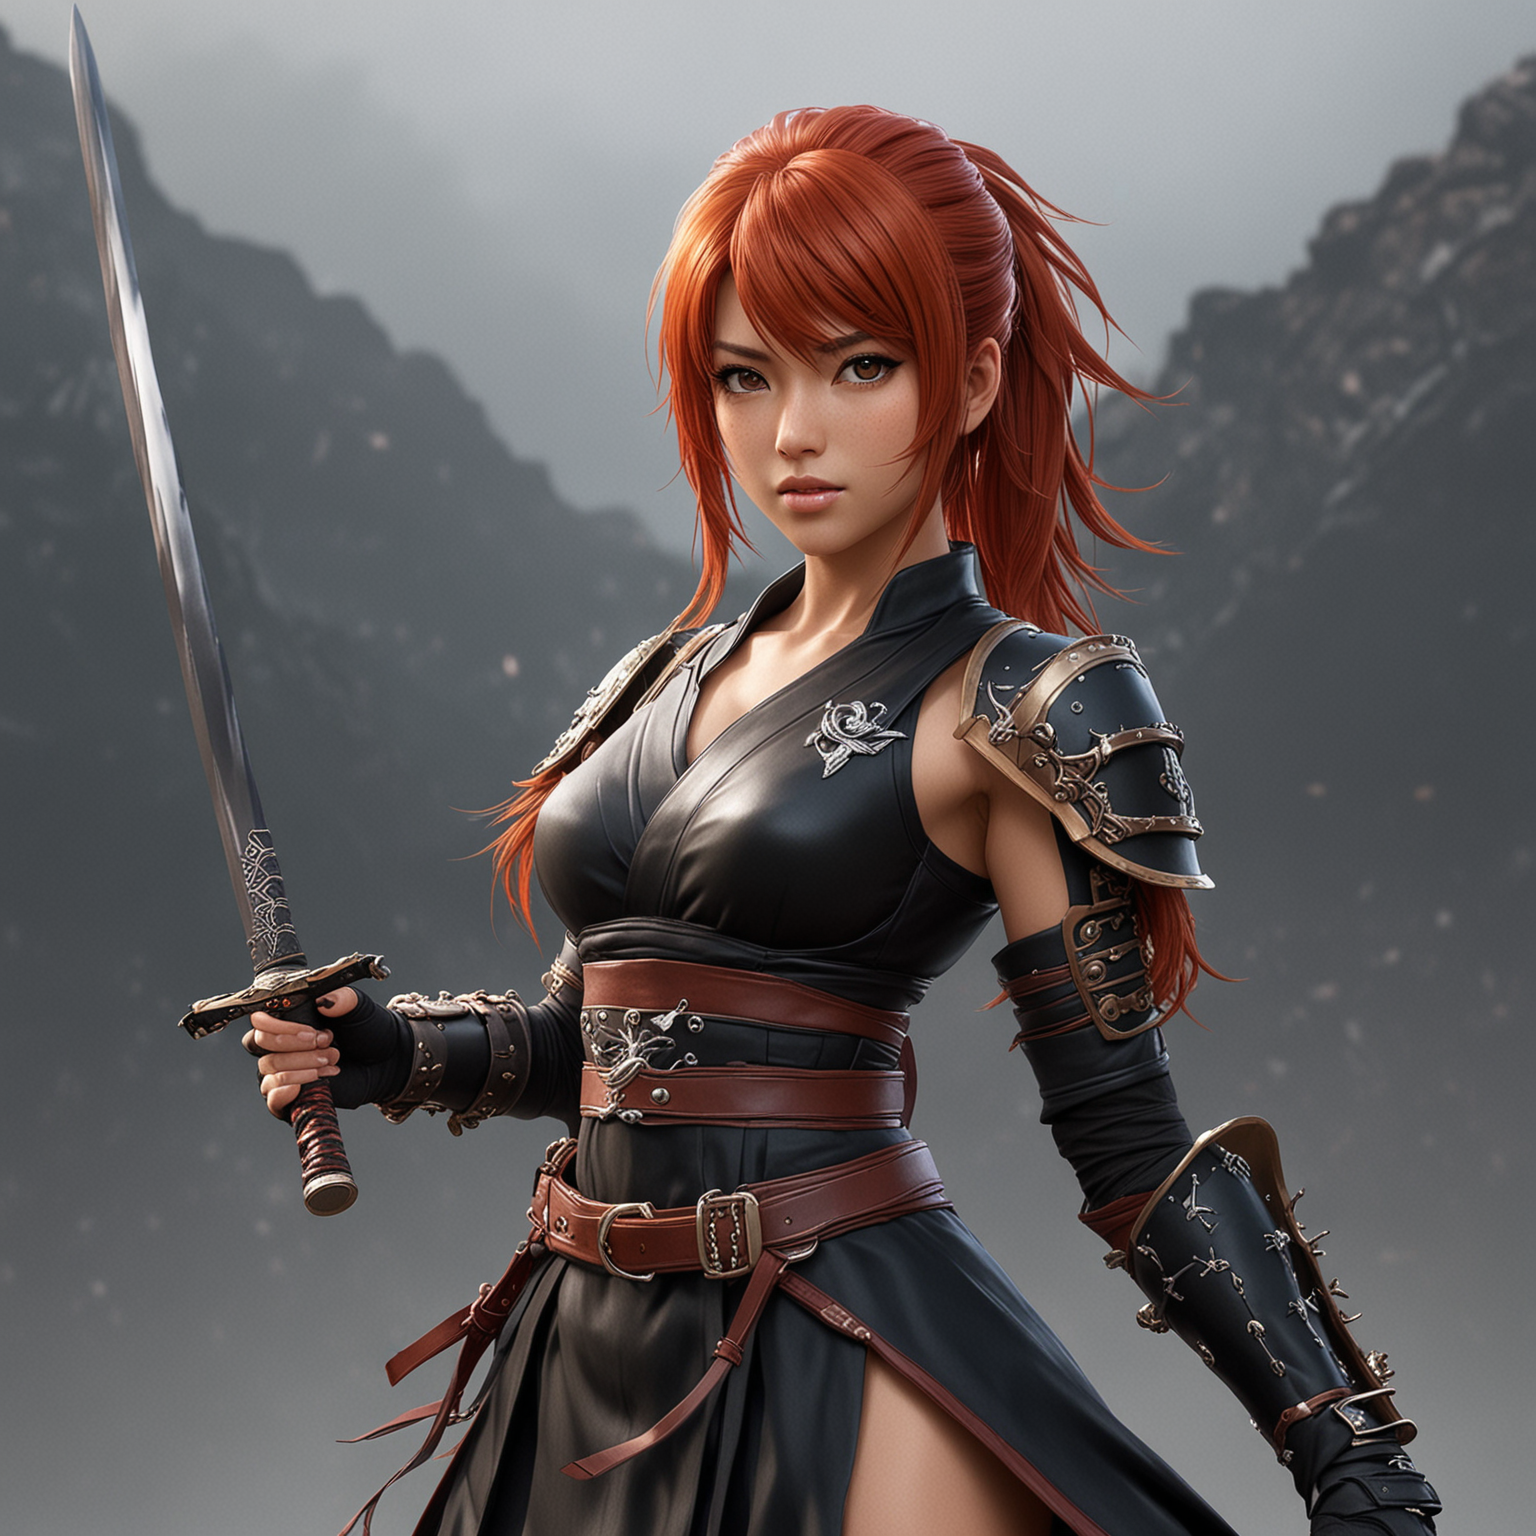 Yoko Nakajima from anime 12 Kingdoms: Juuni Kokki red hair female warrior with brown skin in black anime dress and katana in her hand, hyper-realistic, photo-realistic